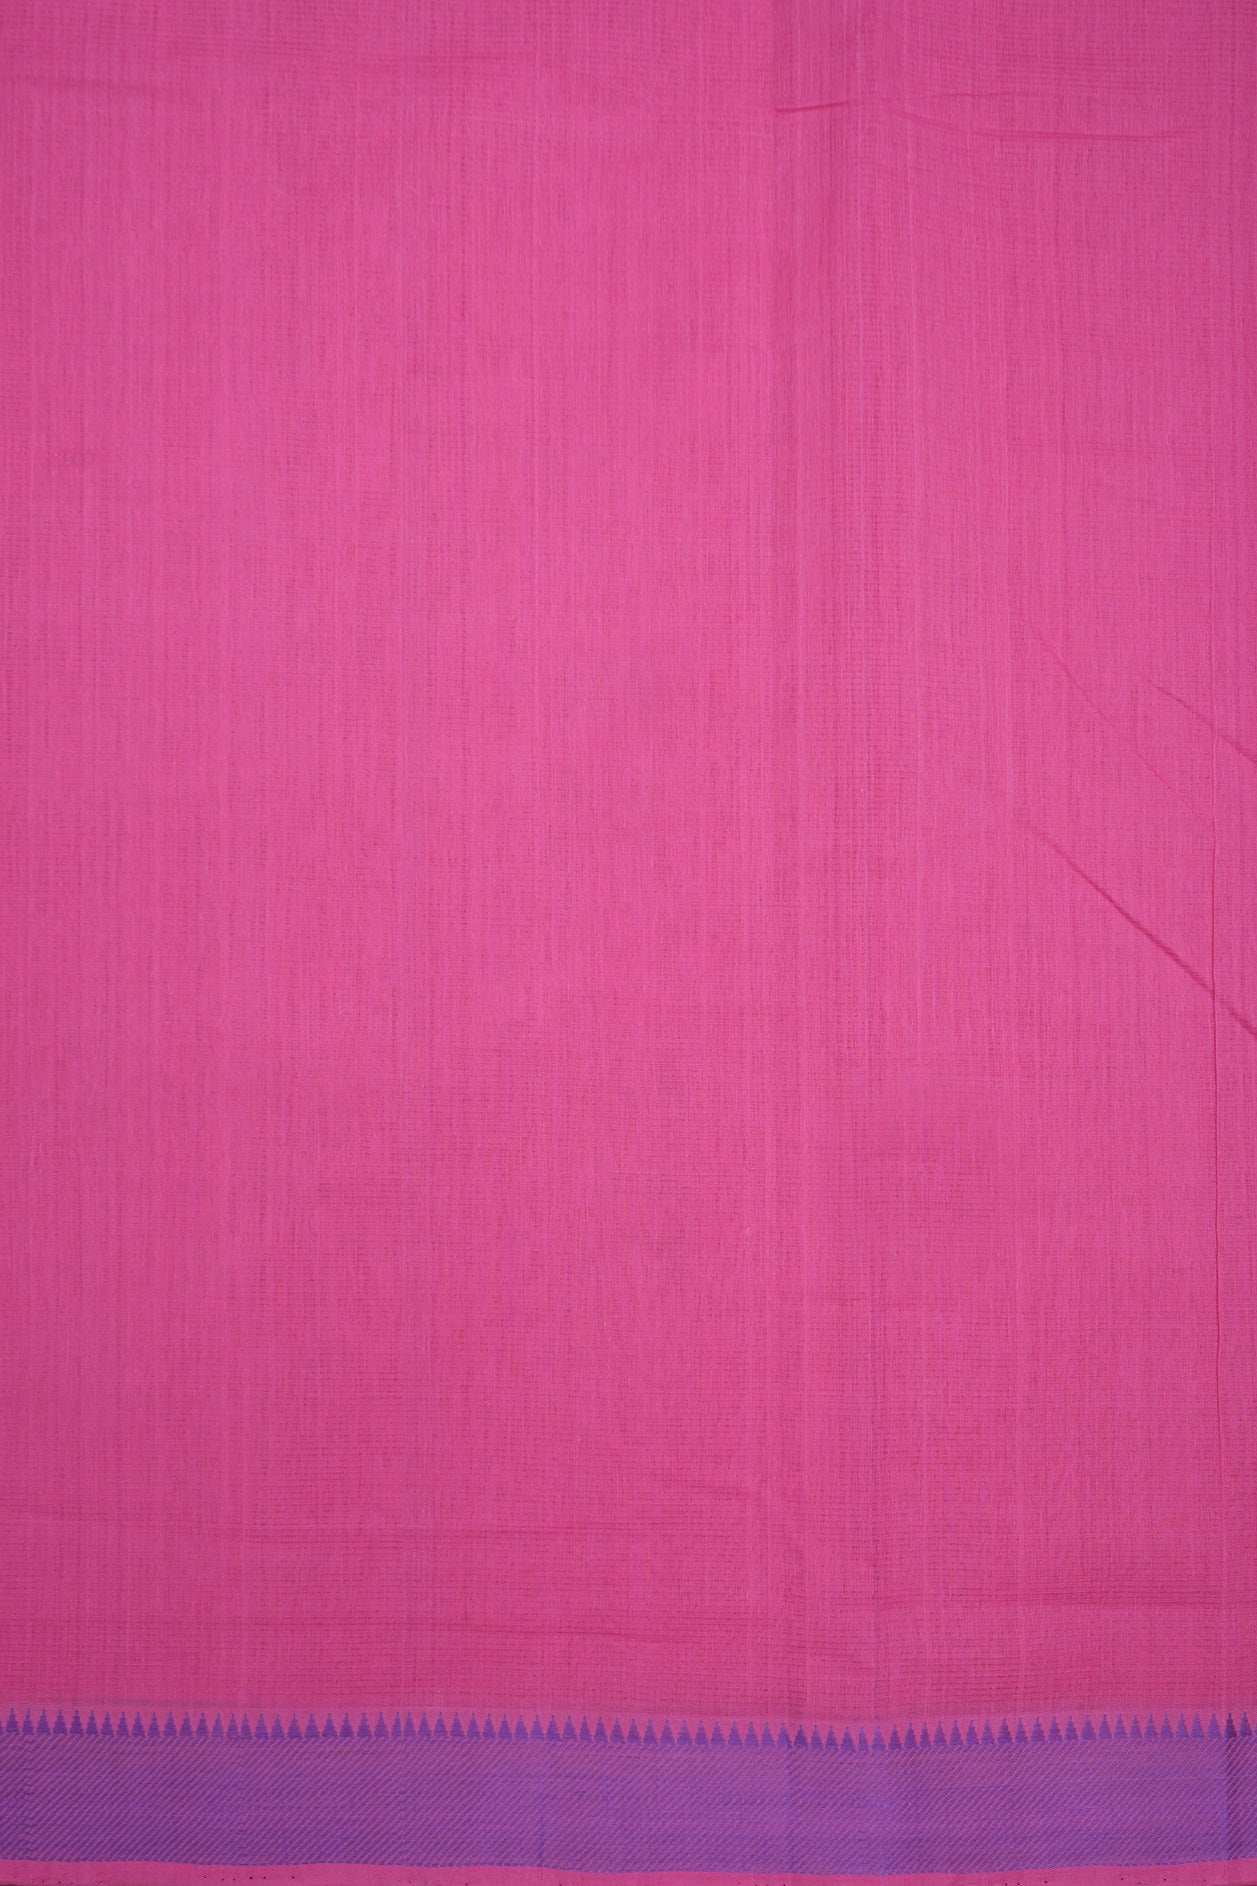 Twill Weave Threadwork Border Pink Mangalagiri Cotton Saree